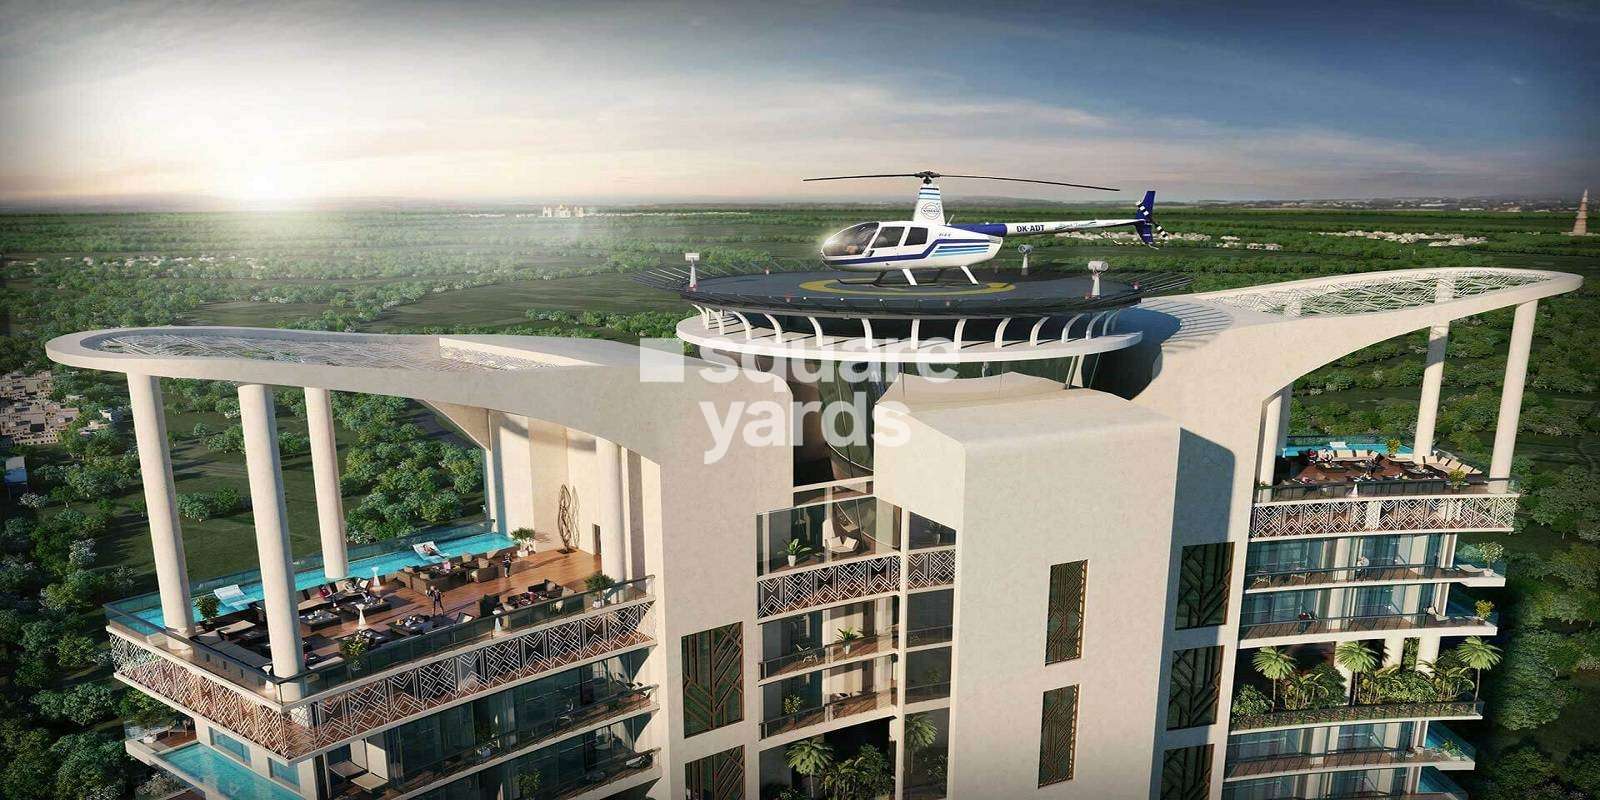 raheja the leela sky villas project amenities features6